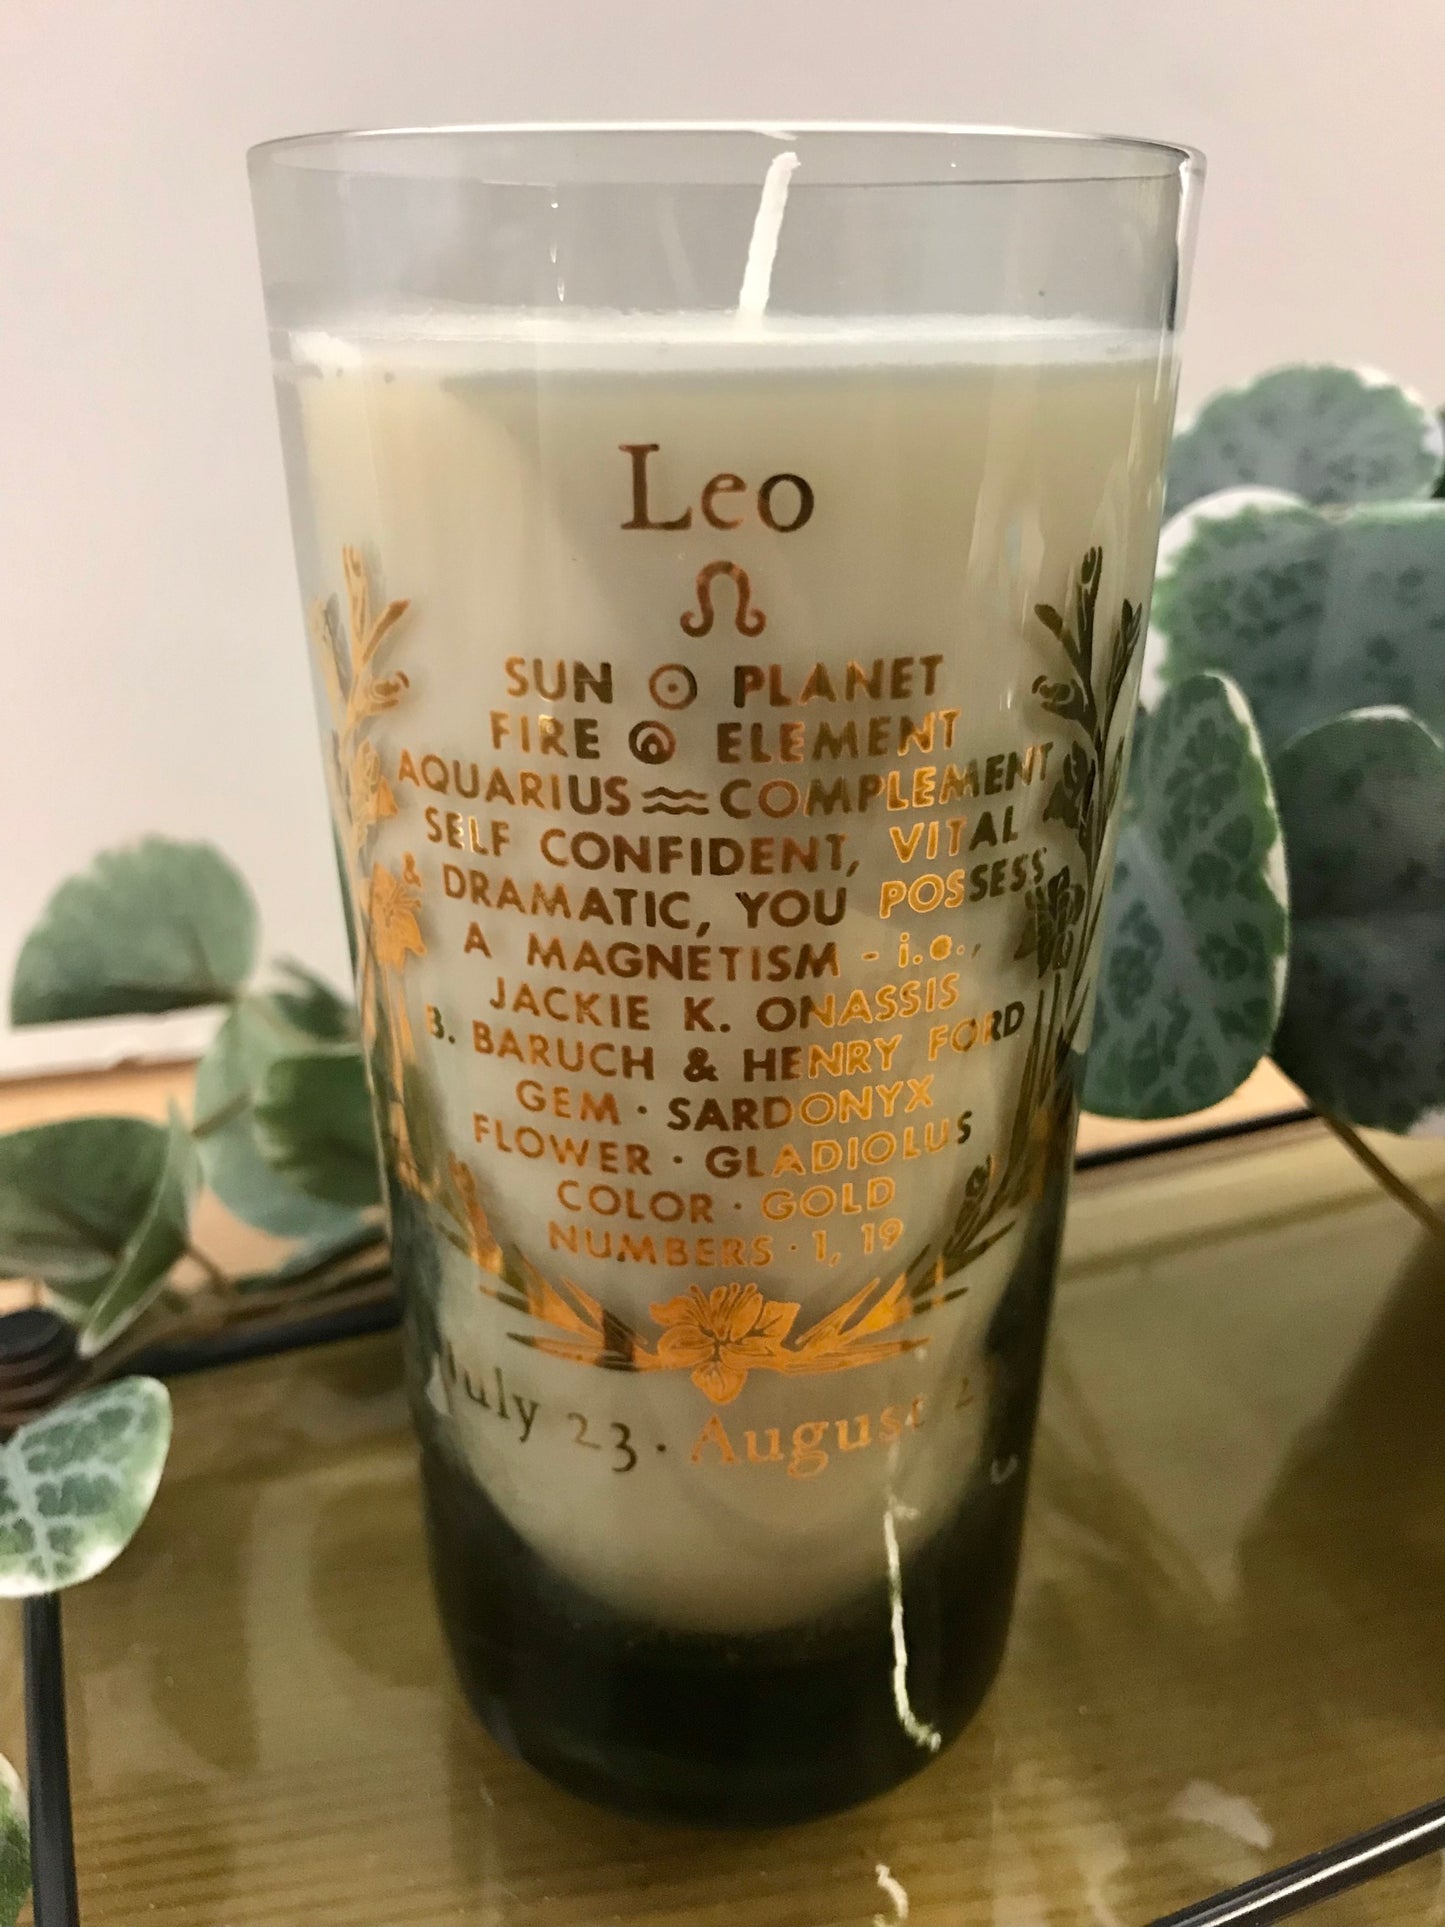 Leo vintage smokey glass candle